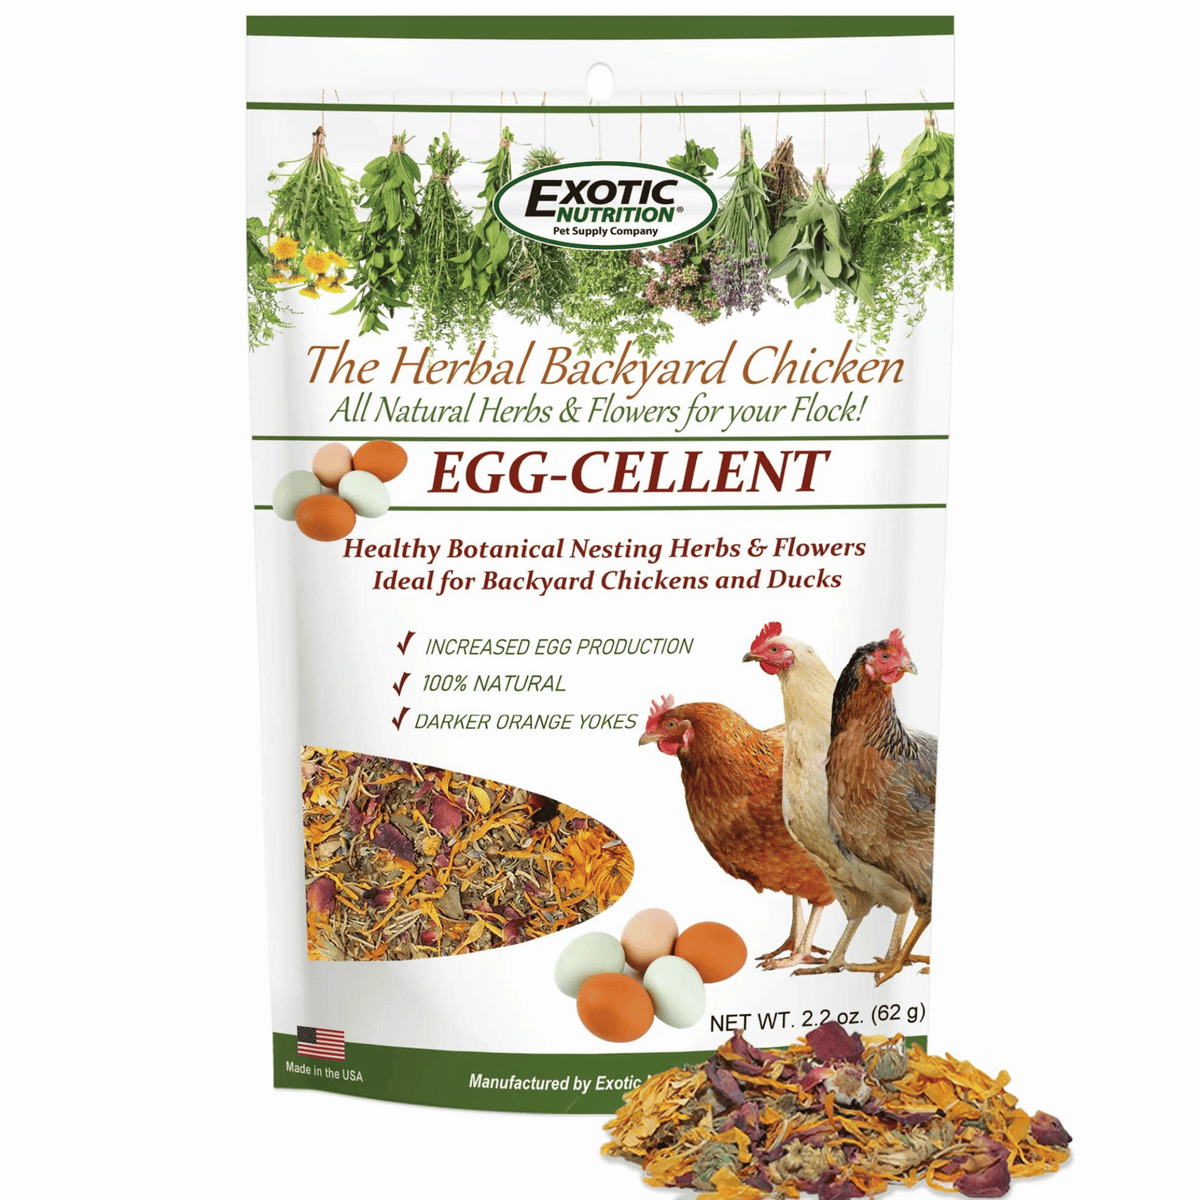 Egg-Cellent Chicken Nesting Herbs